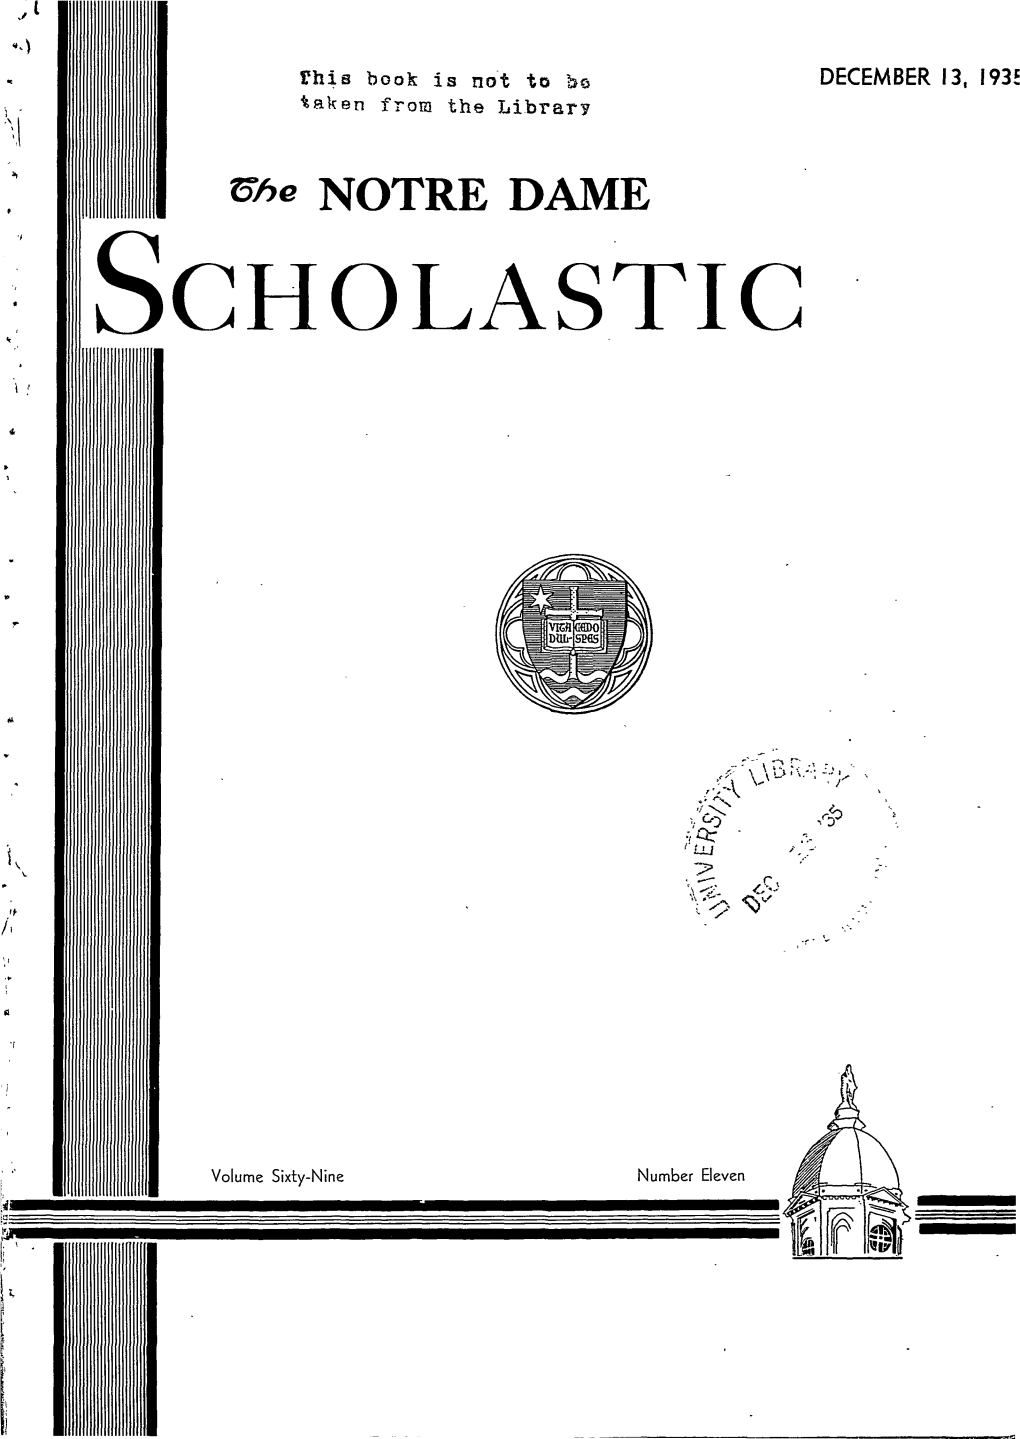 Notre Dame Scholastic, Vol. 69, No. 11 -- 13 December 1935